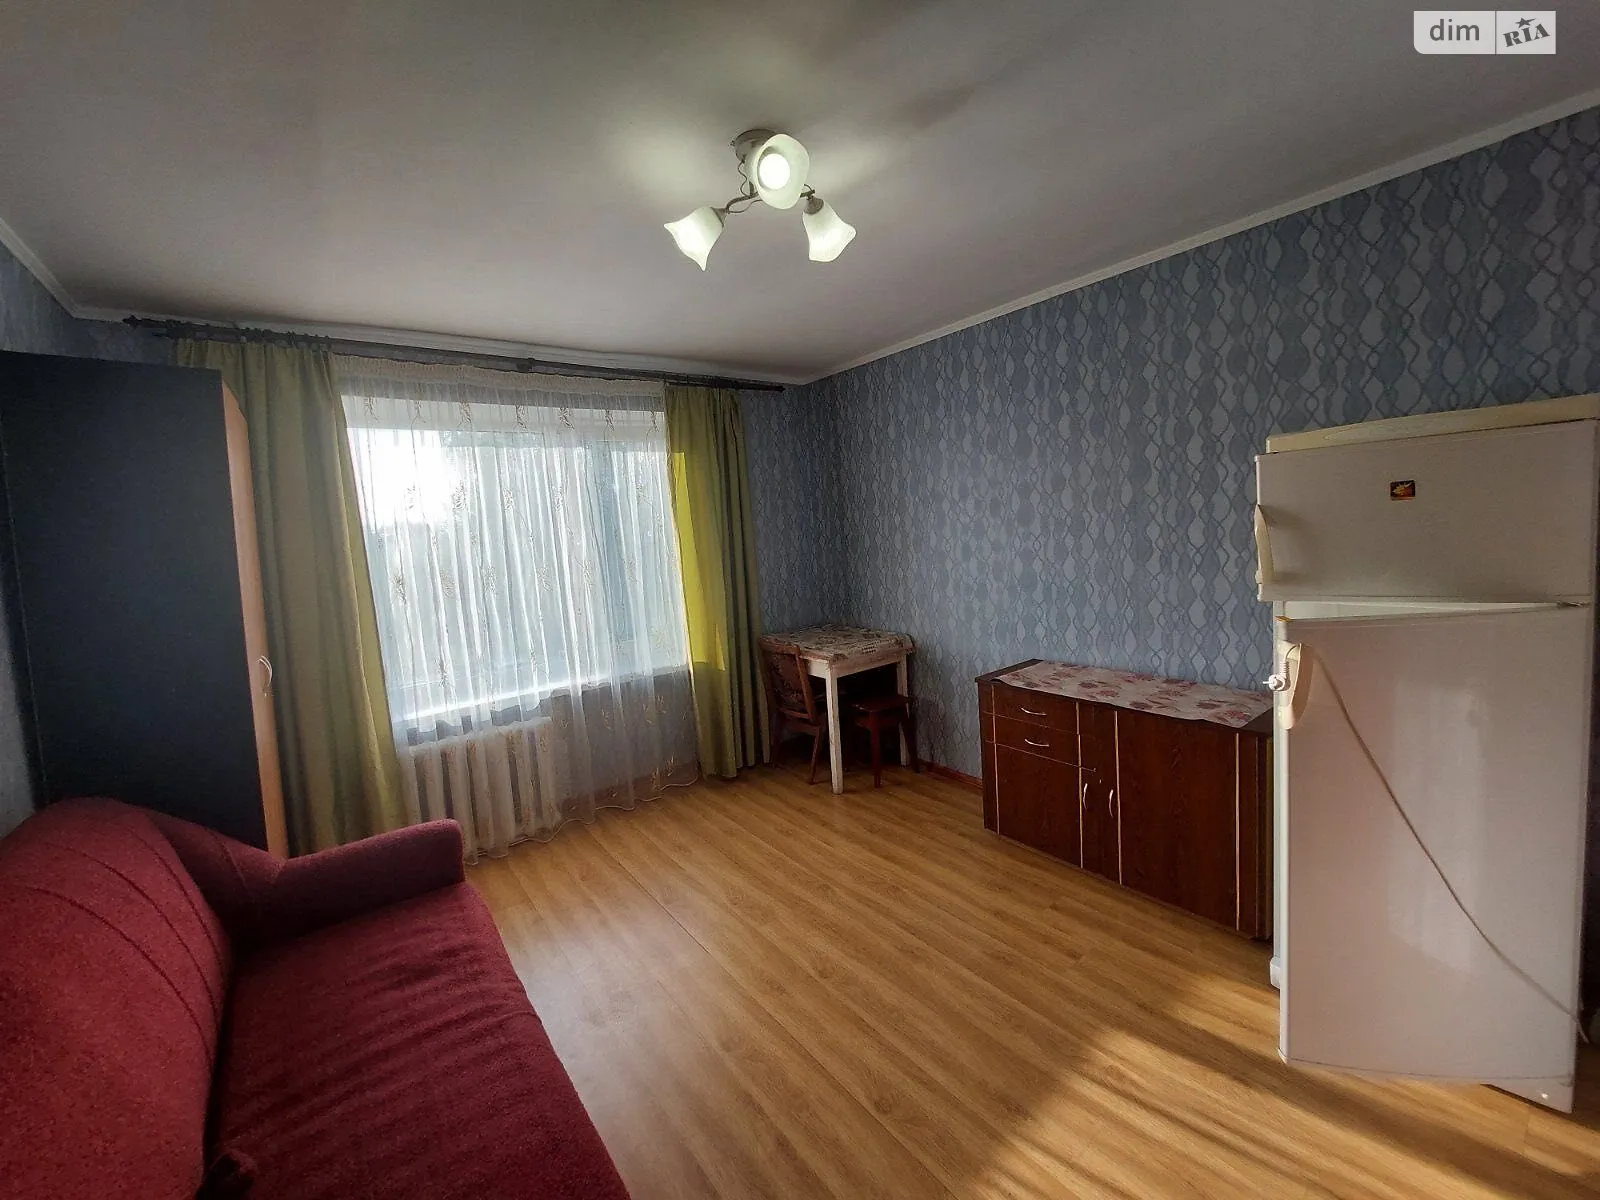 Сдается в аренду комната 21 кв. м в Виннице, цена: 3500 грн - фото 1